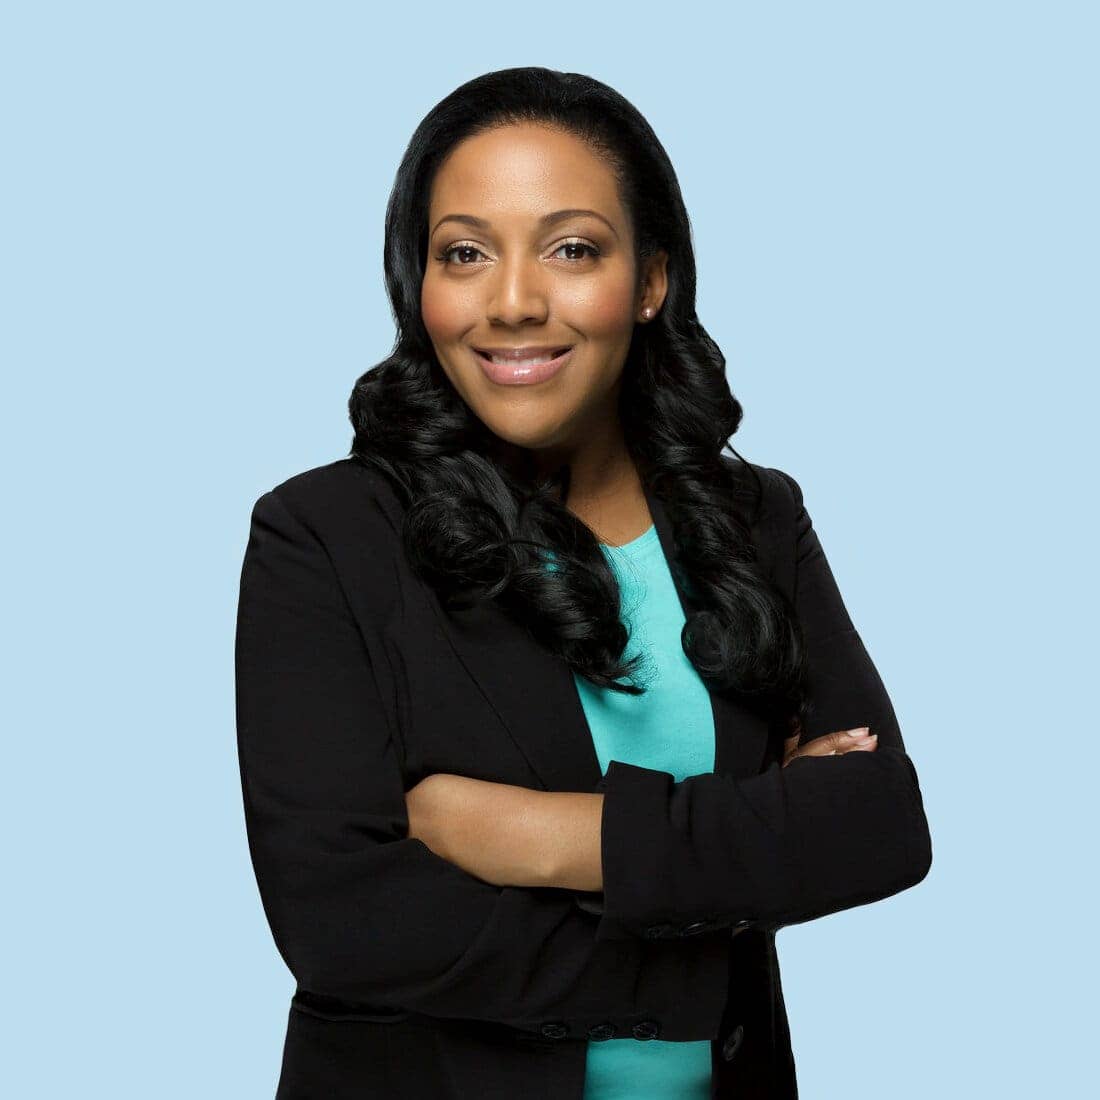 Yolanda-F.-Johnson, Six Black, female fundraising and philanthropy professionals you should know, News & Views 